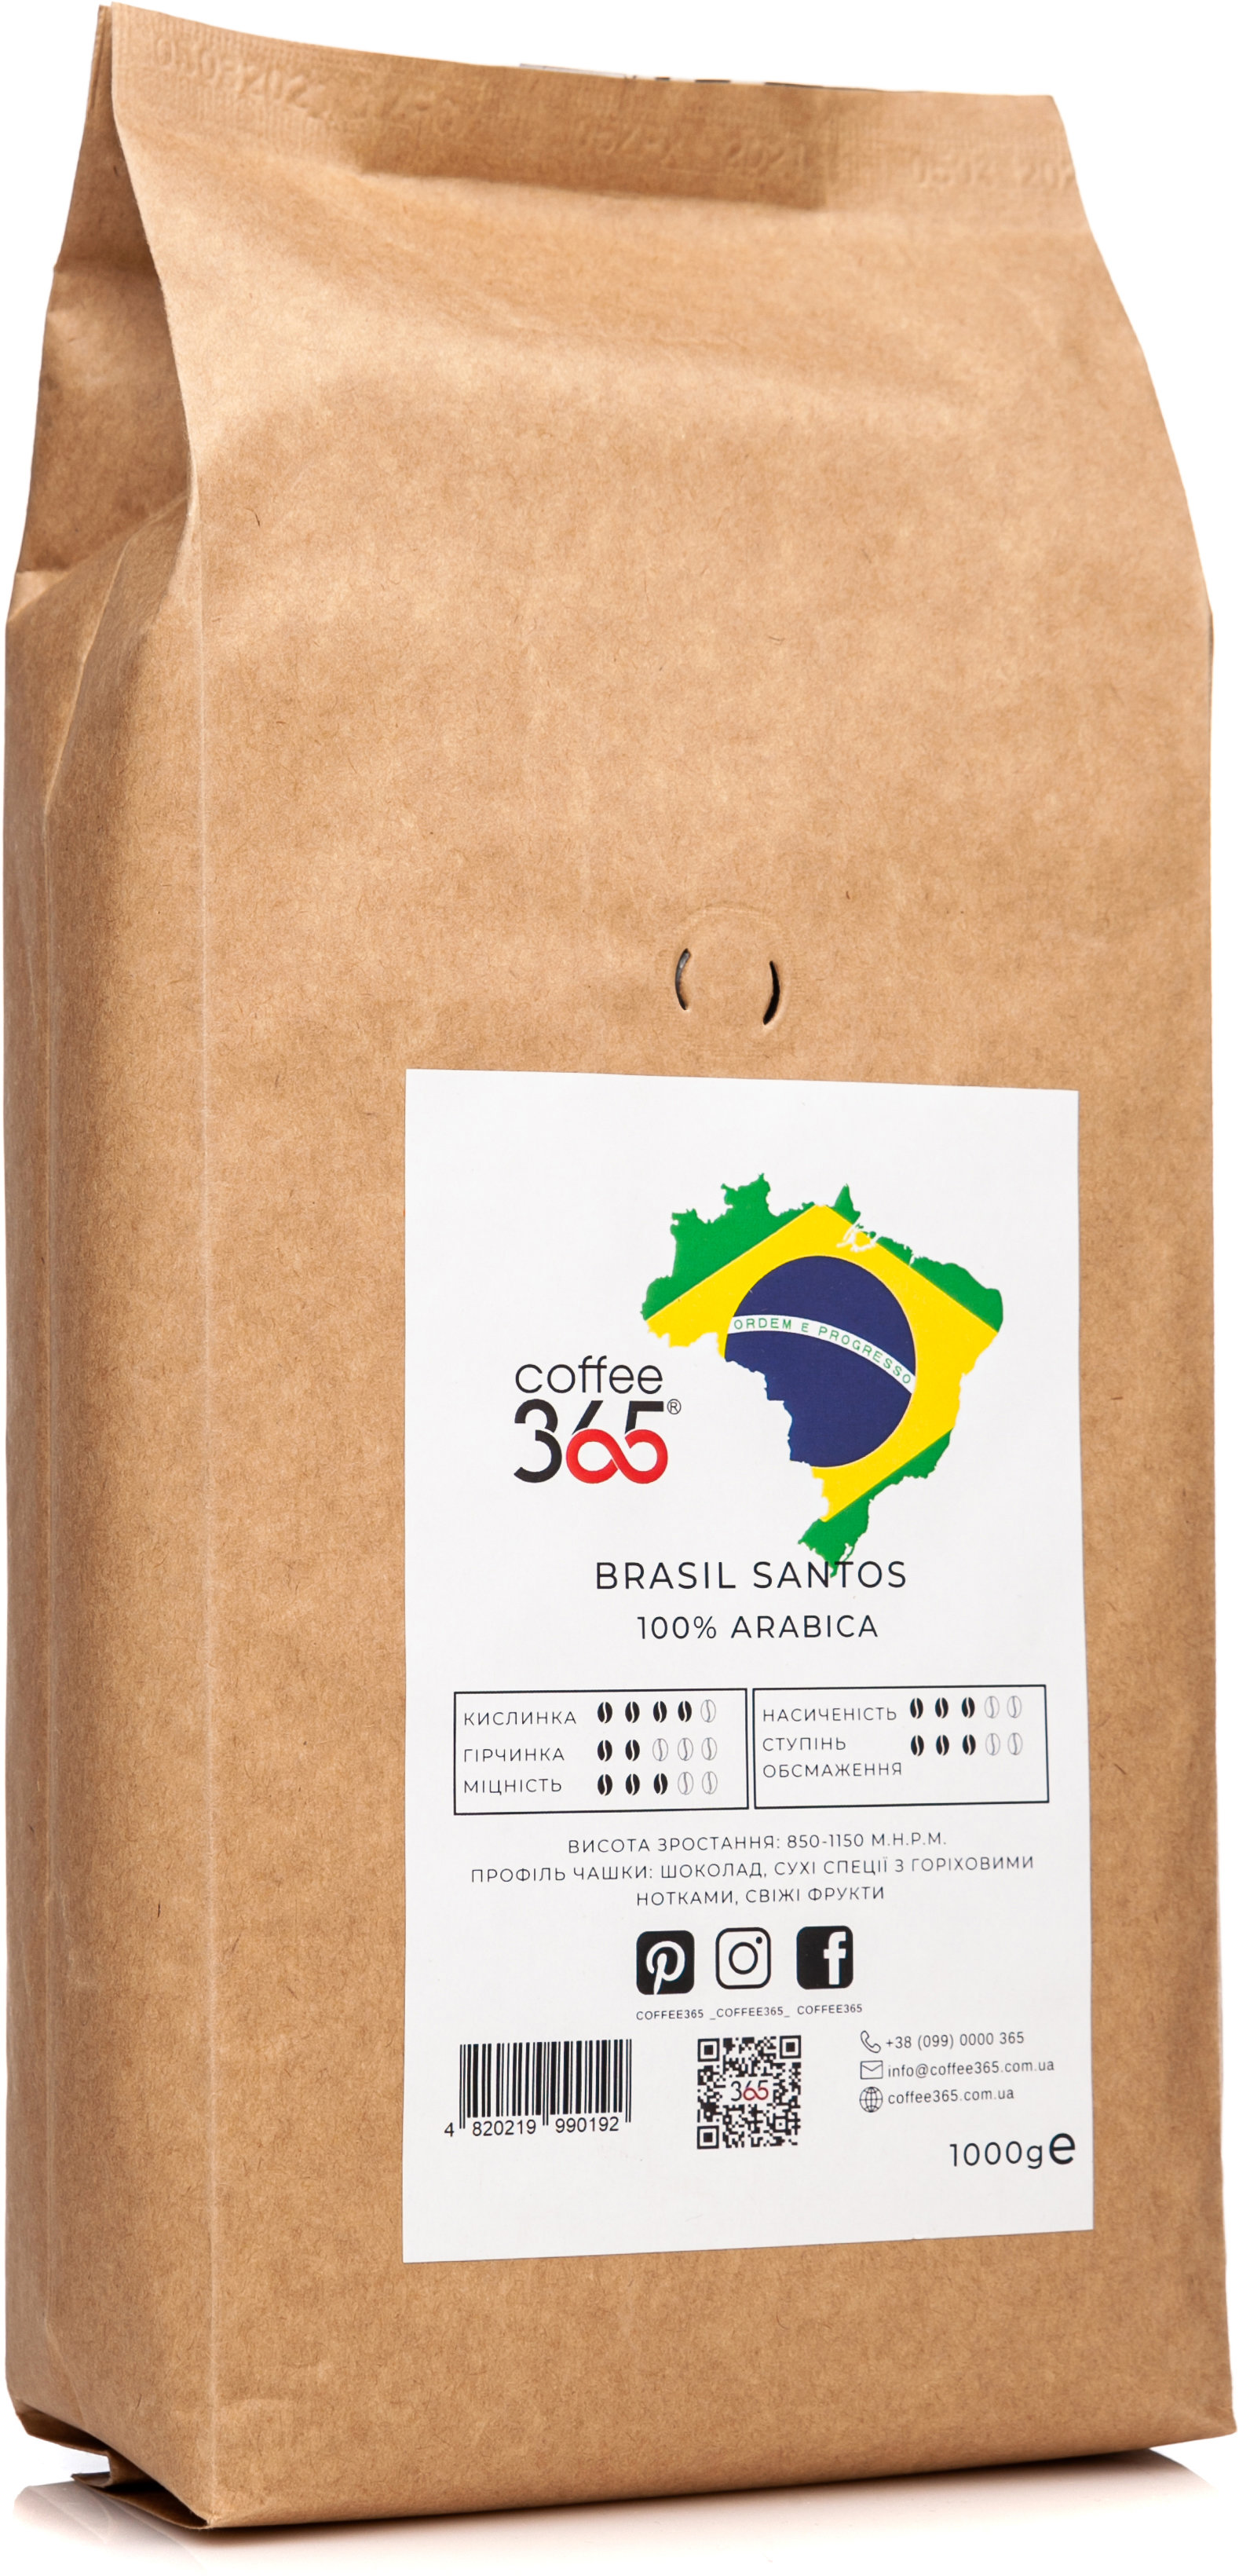 Акция на Кофе в зернах Coffee365 Brasil Santos 1 кг (4820219990192) от Stylus